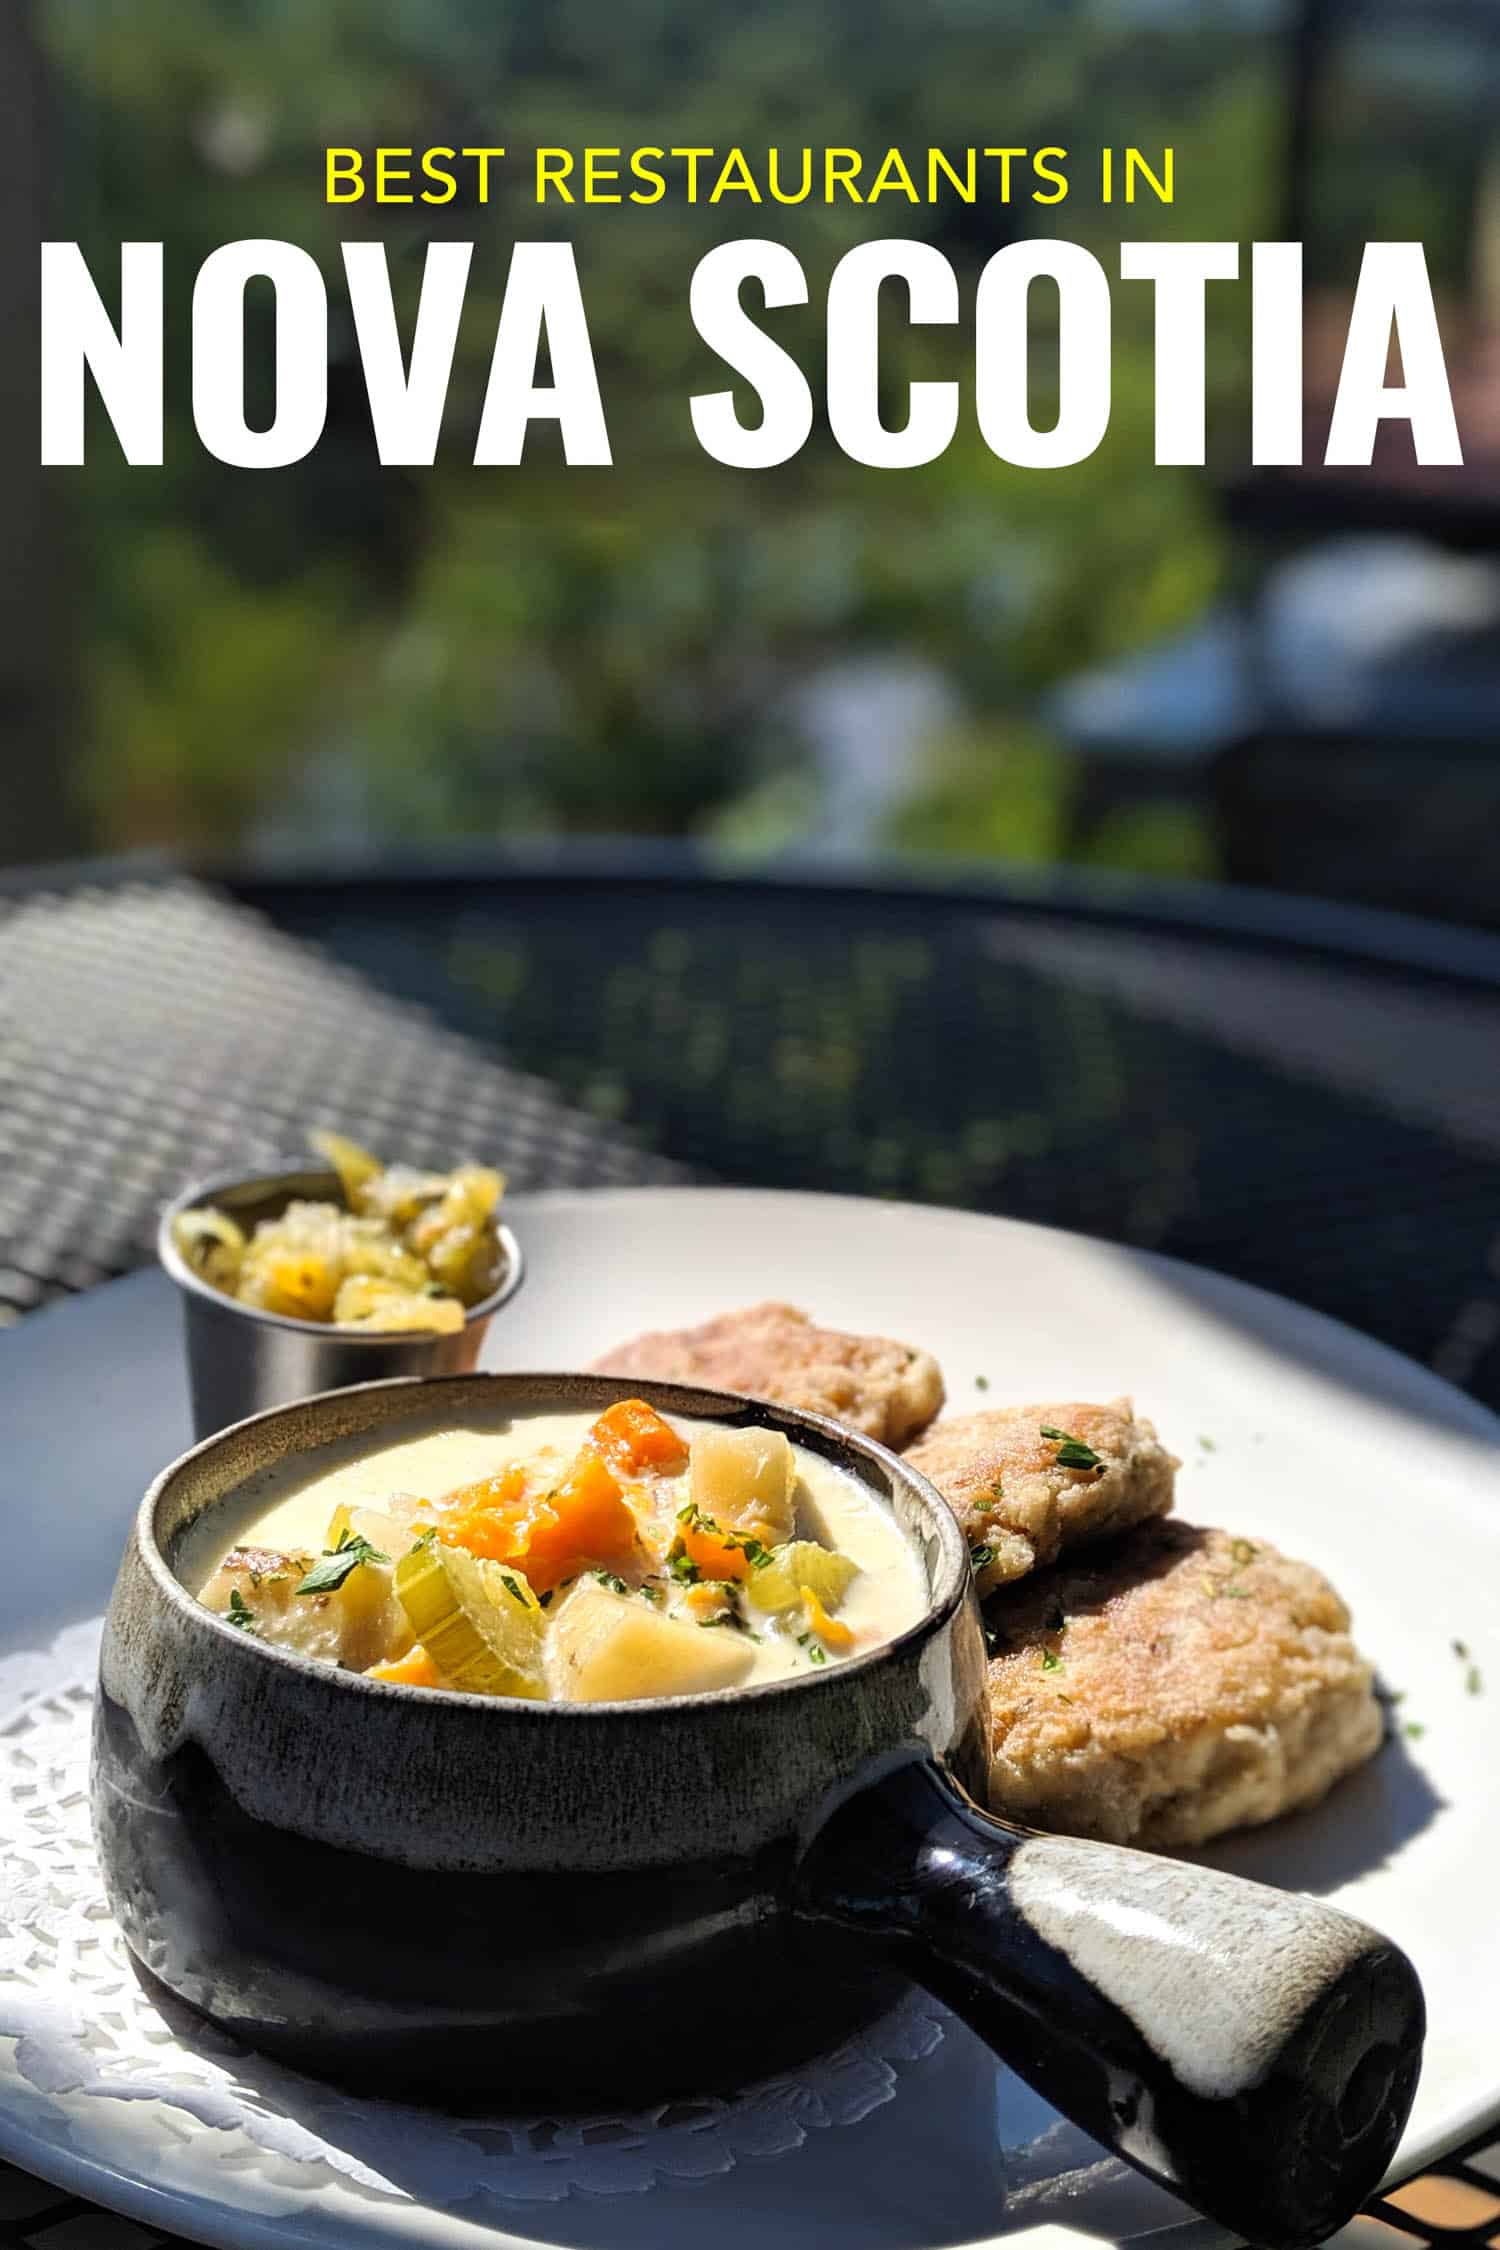 Seafood chowder from a Nova Scotia restaurant